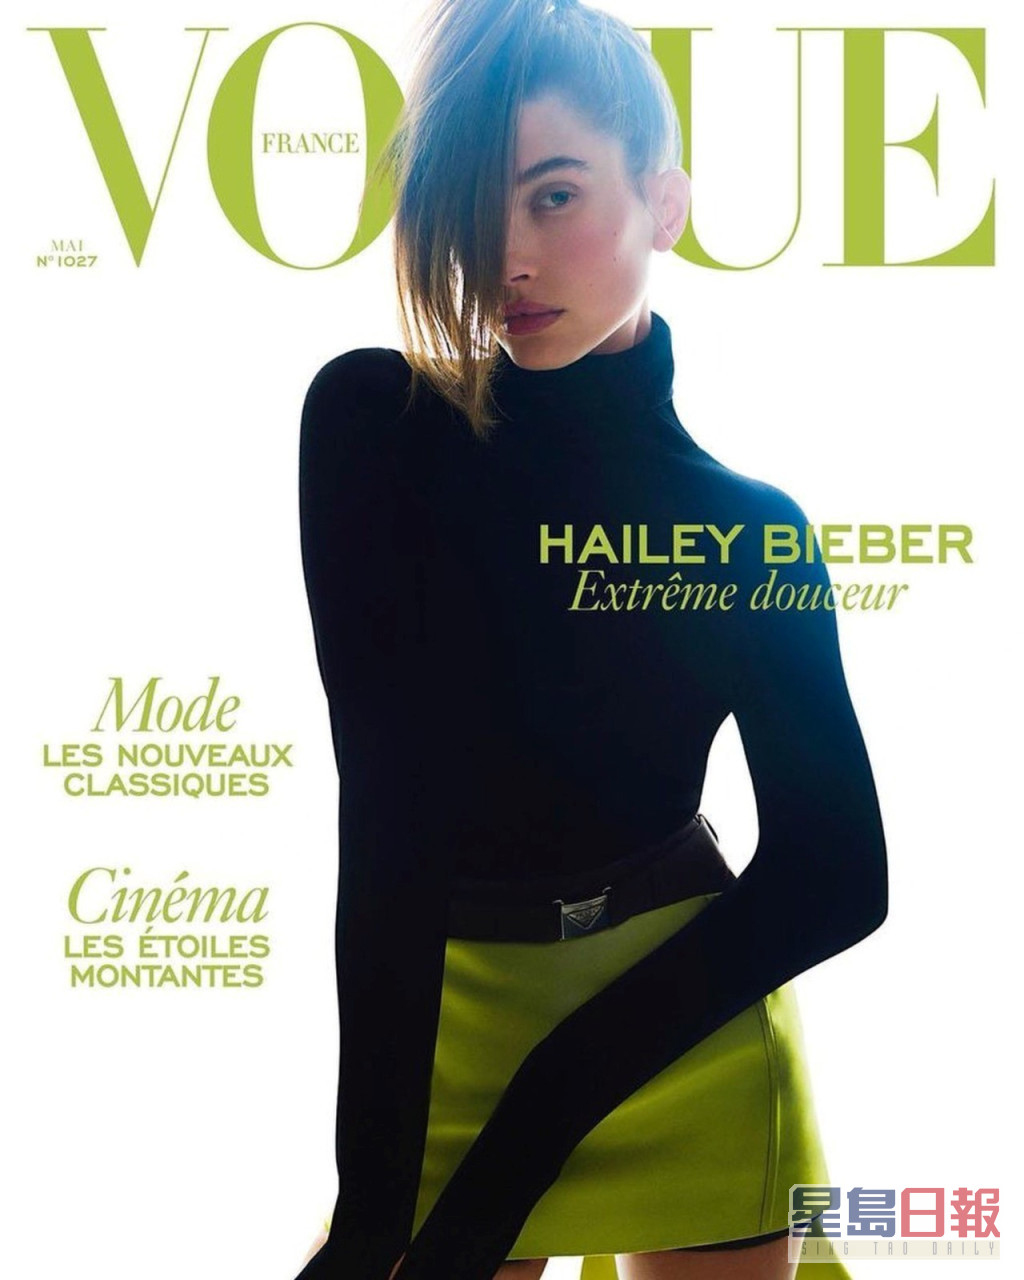 Hailey Bieber登上法国版《Vogue》封面。(《Vogue》图片)